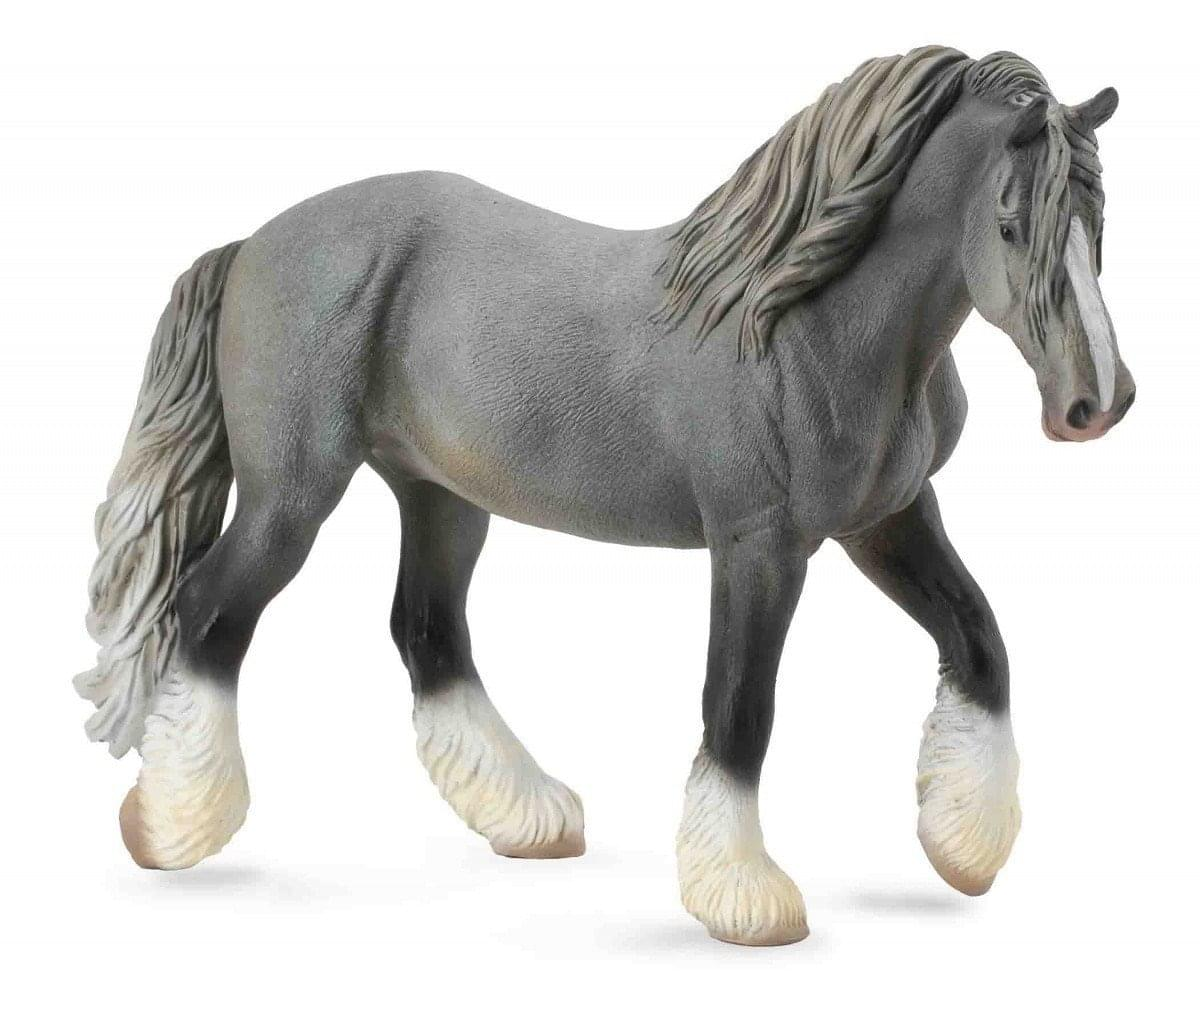 Art shop wholesale customized life size Clydesdale horse sculpture